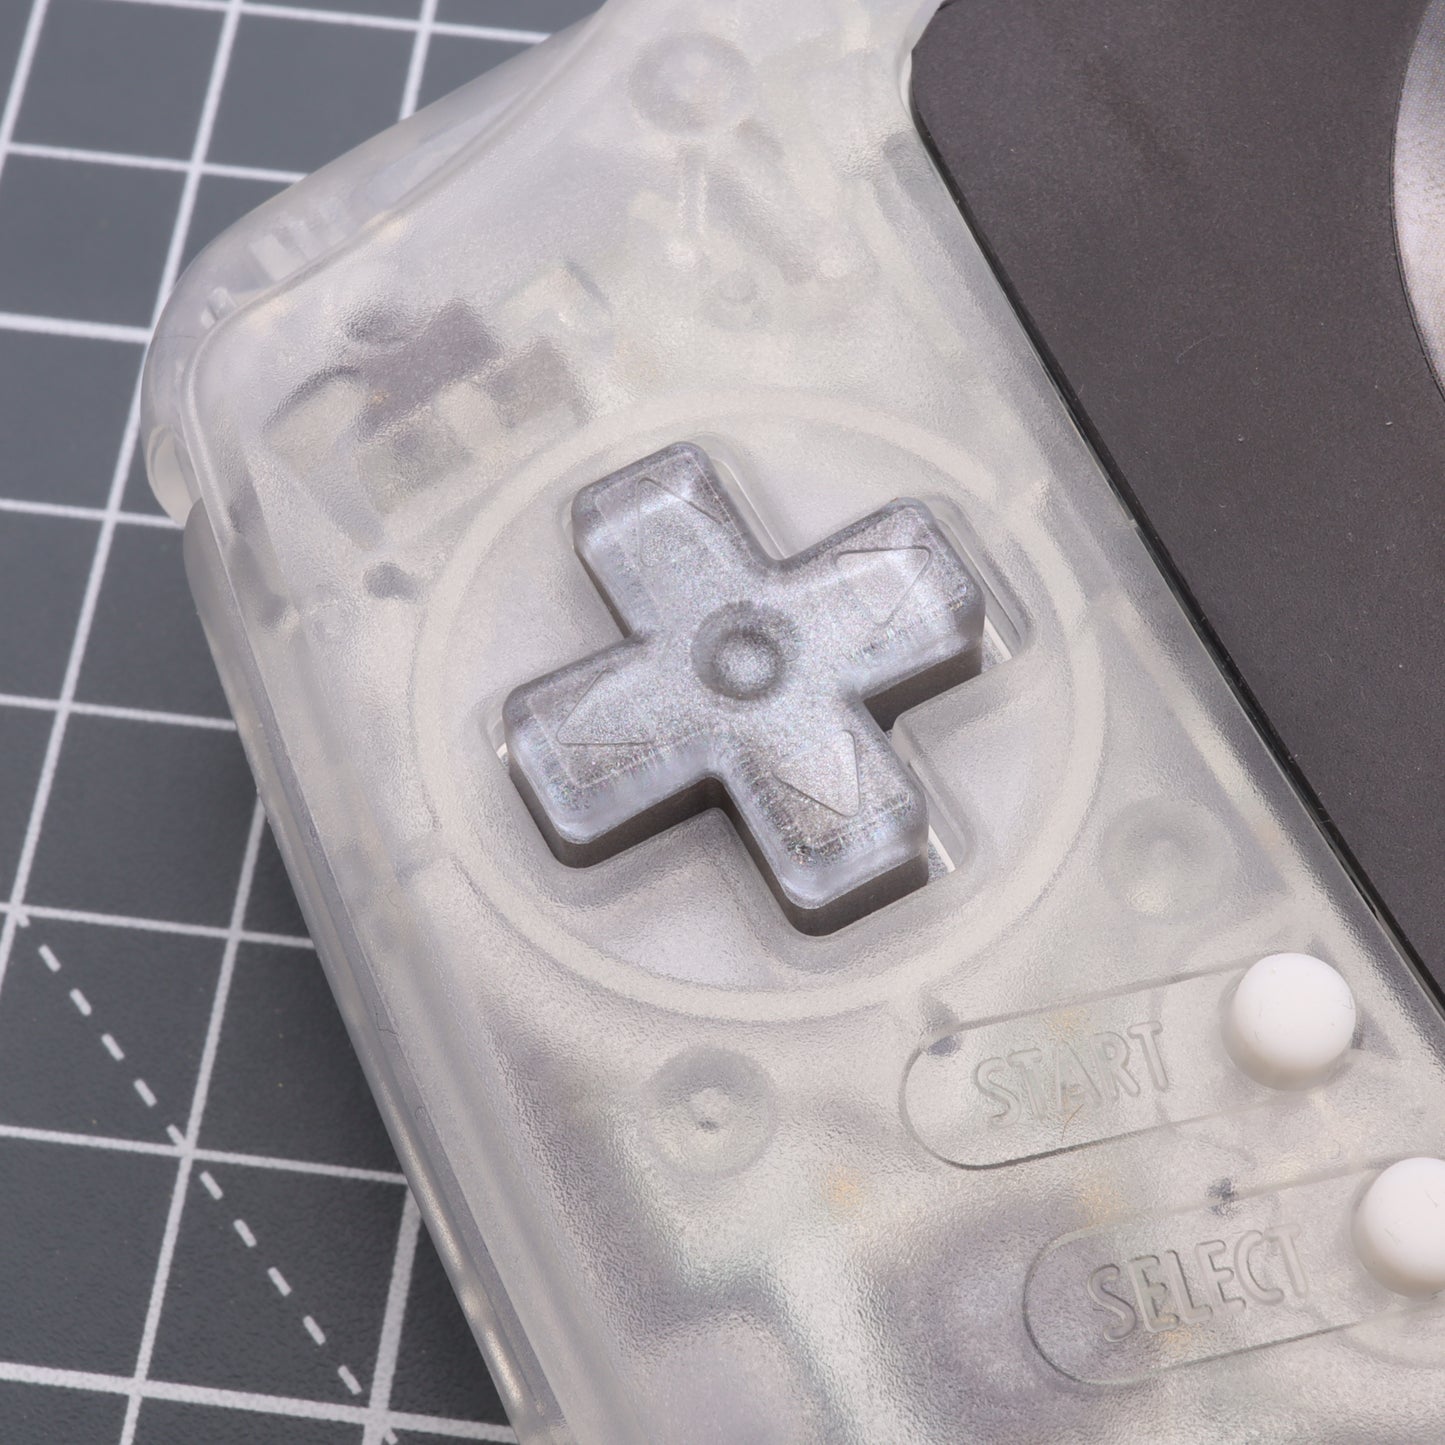 Game Boy Advance - Custom Buttons - Metallic Silver